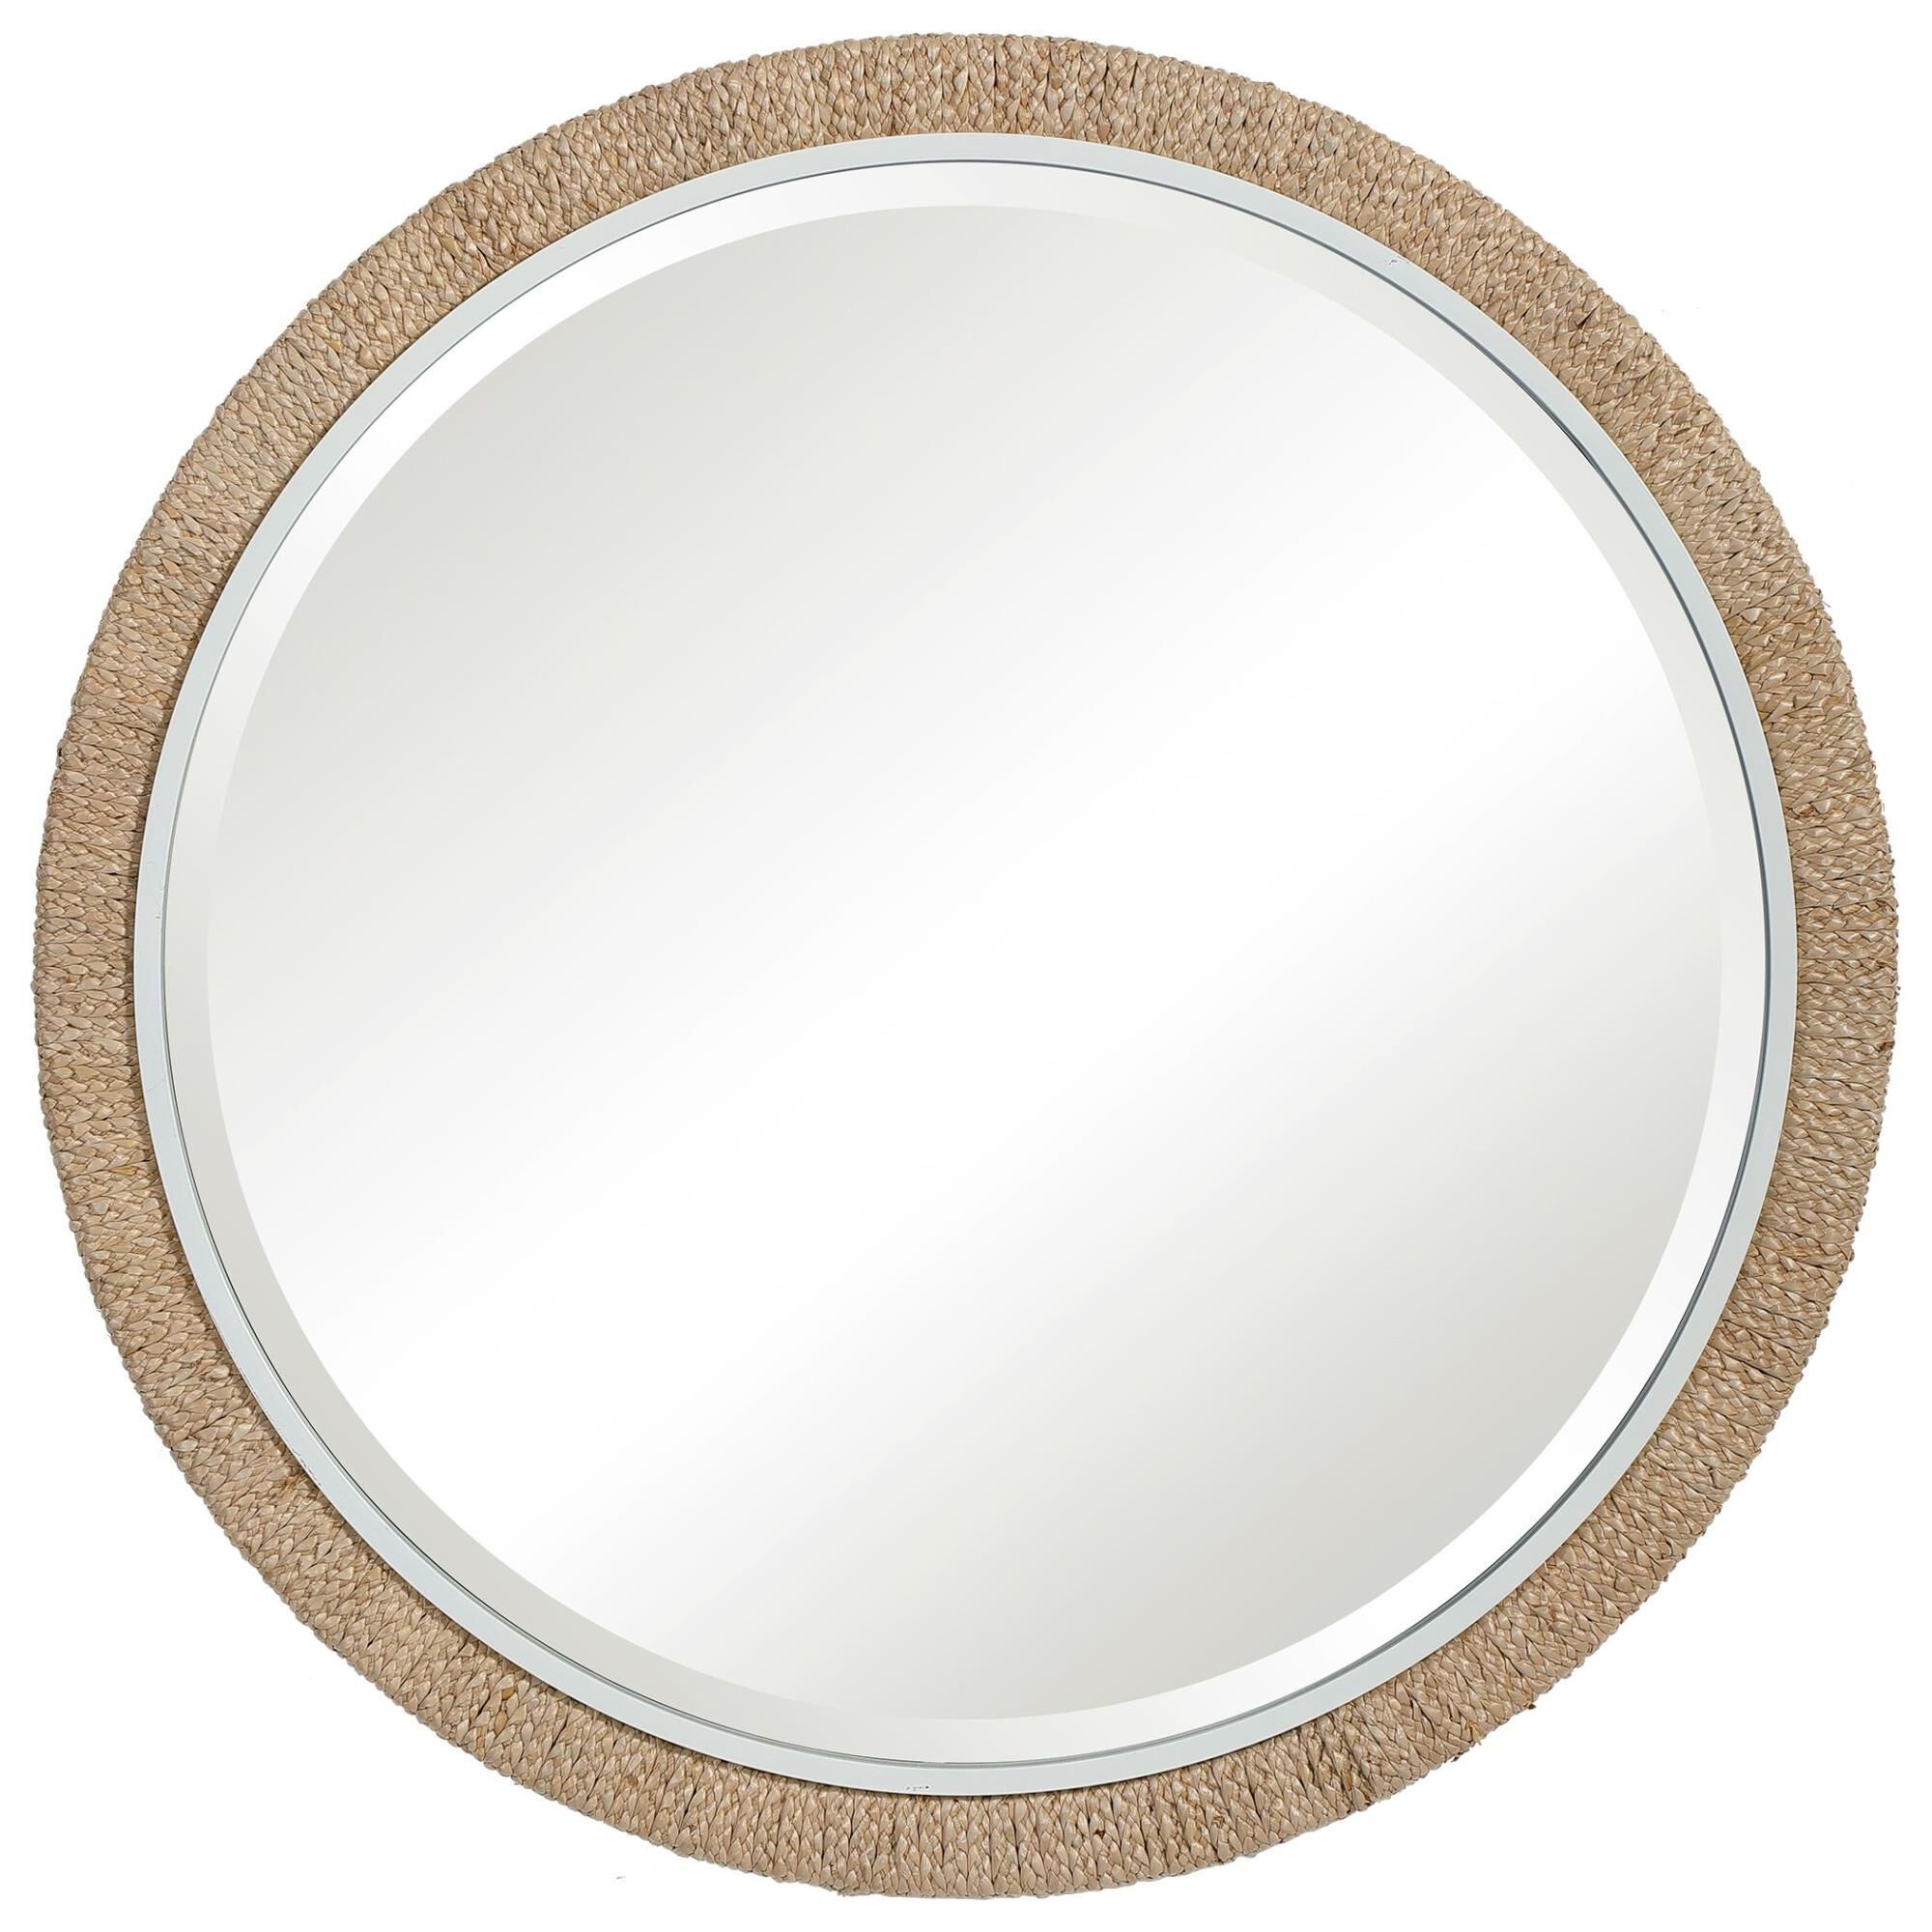 Uttermost Cabaret Round Mirror by Uttermost | Capitol Lighting 1800lighting.com